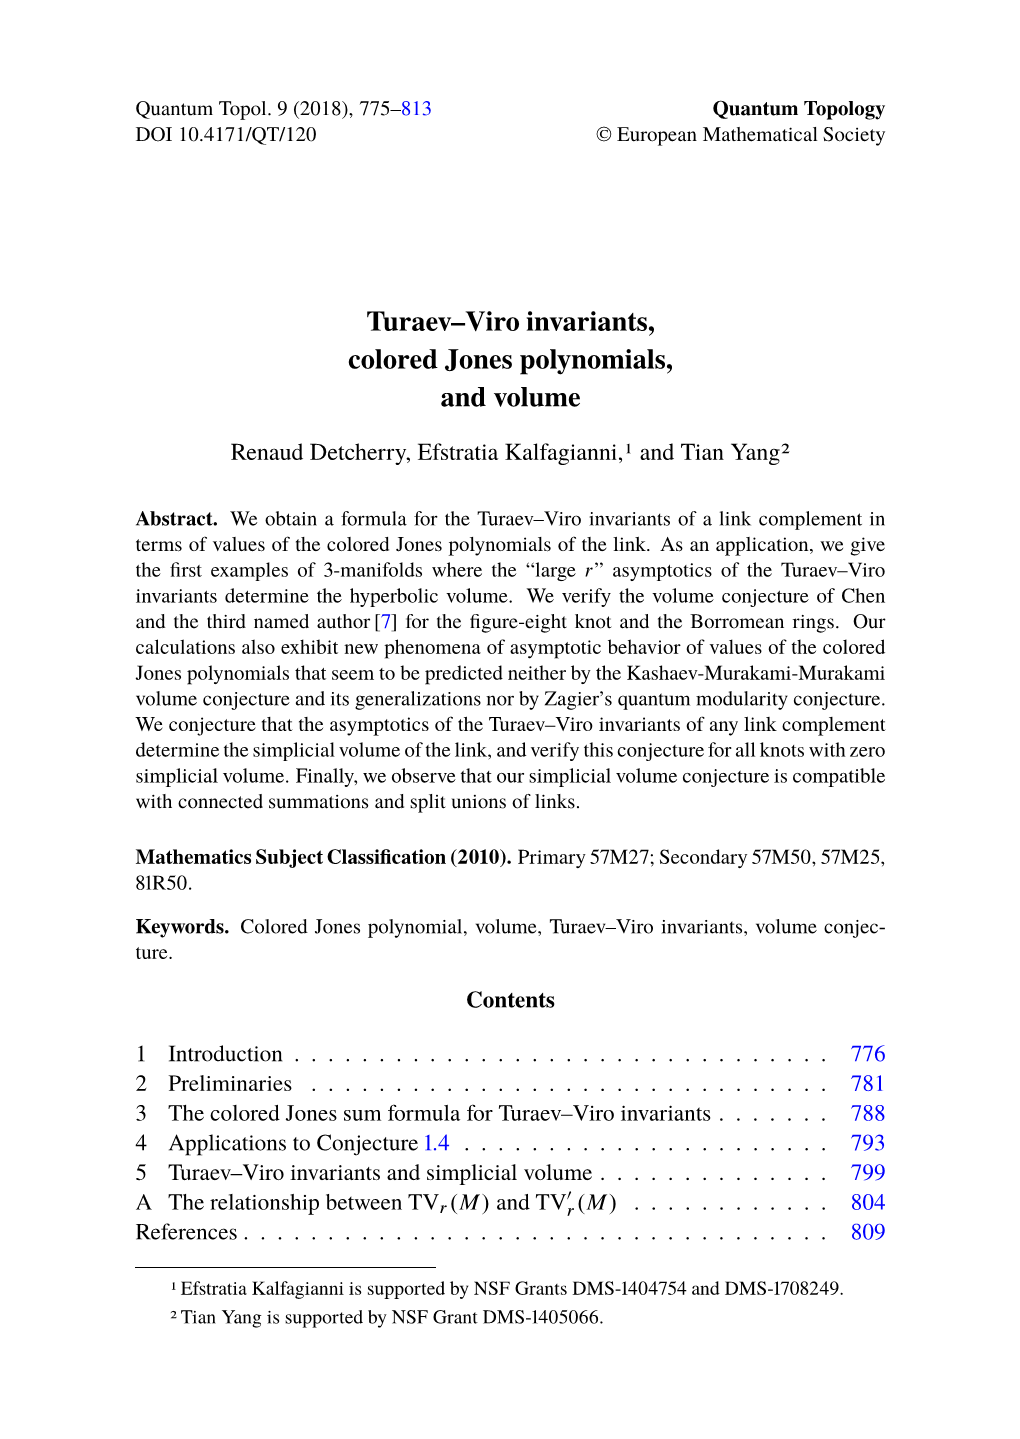 Turaev–Viro Invariants, Colored Jones Polynomials, and Volume